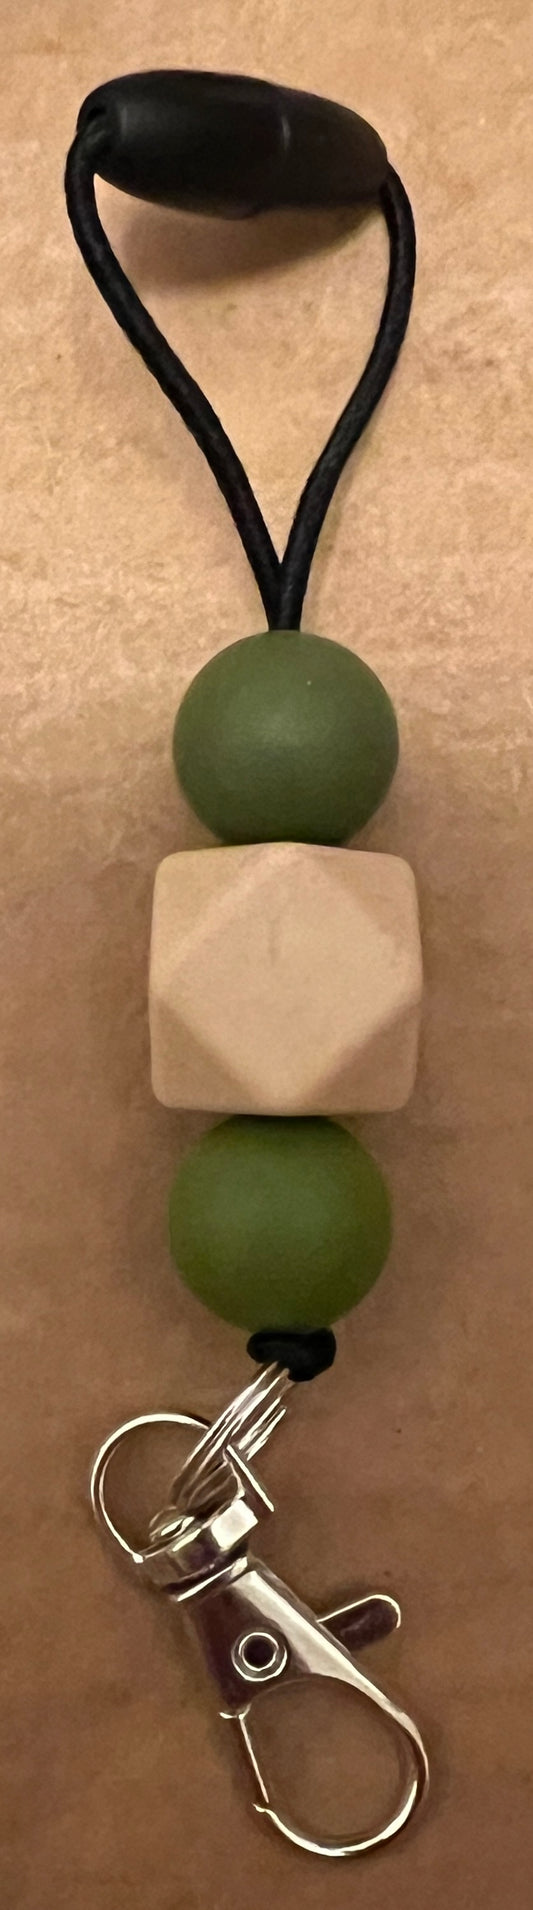 Multi Color (Green/Tan) Shapes Hanger